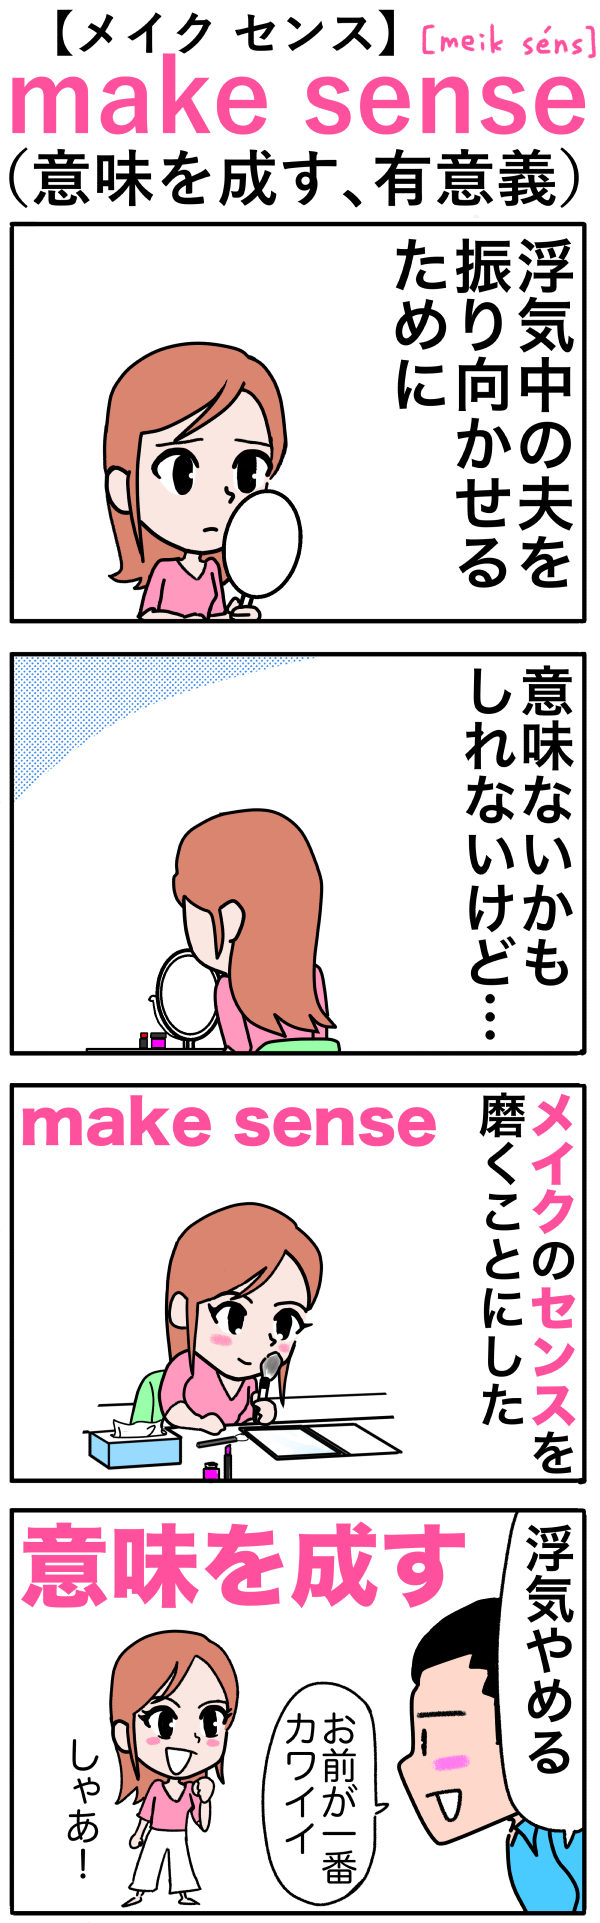 make sense（意味を成す）の語呂合わせ英単語